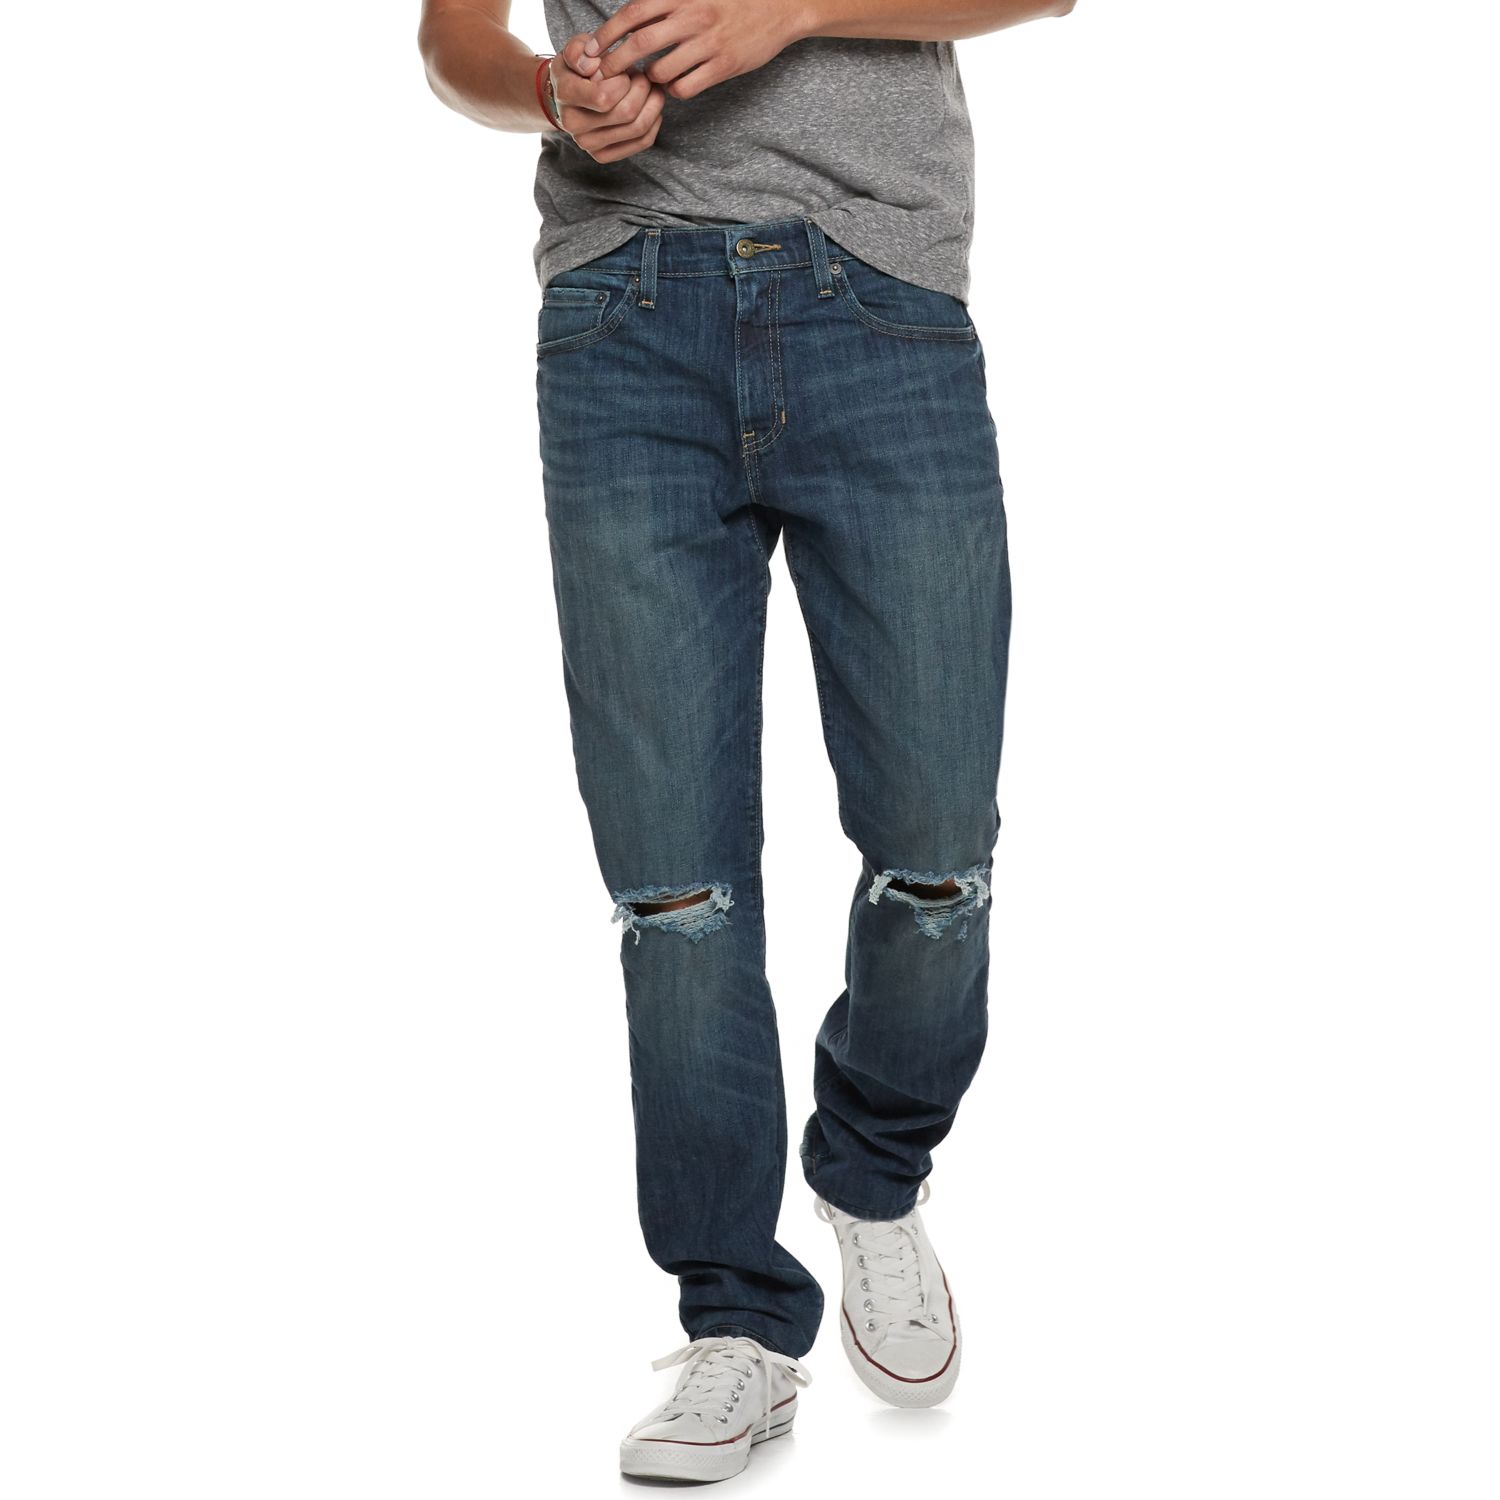 urban jeans kohls